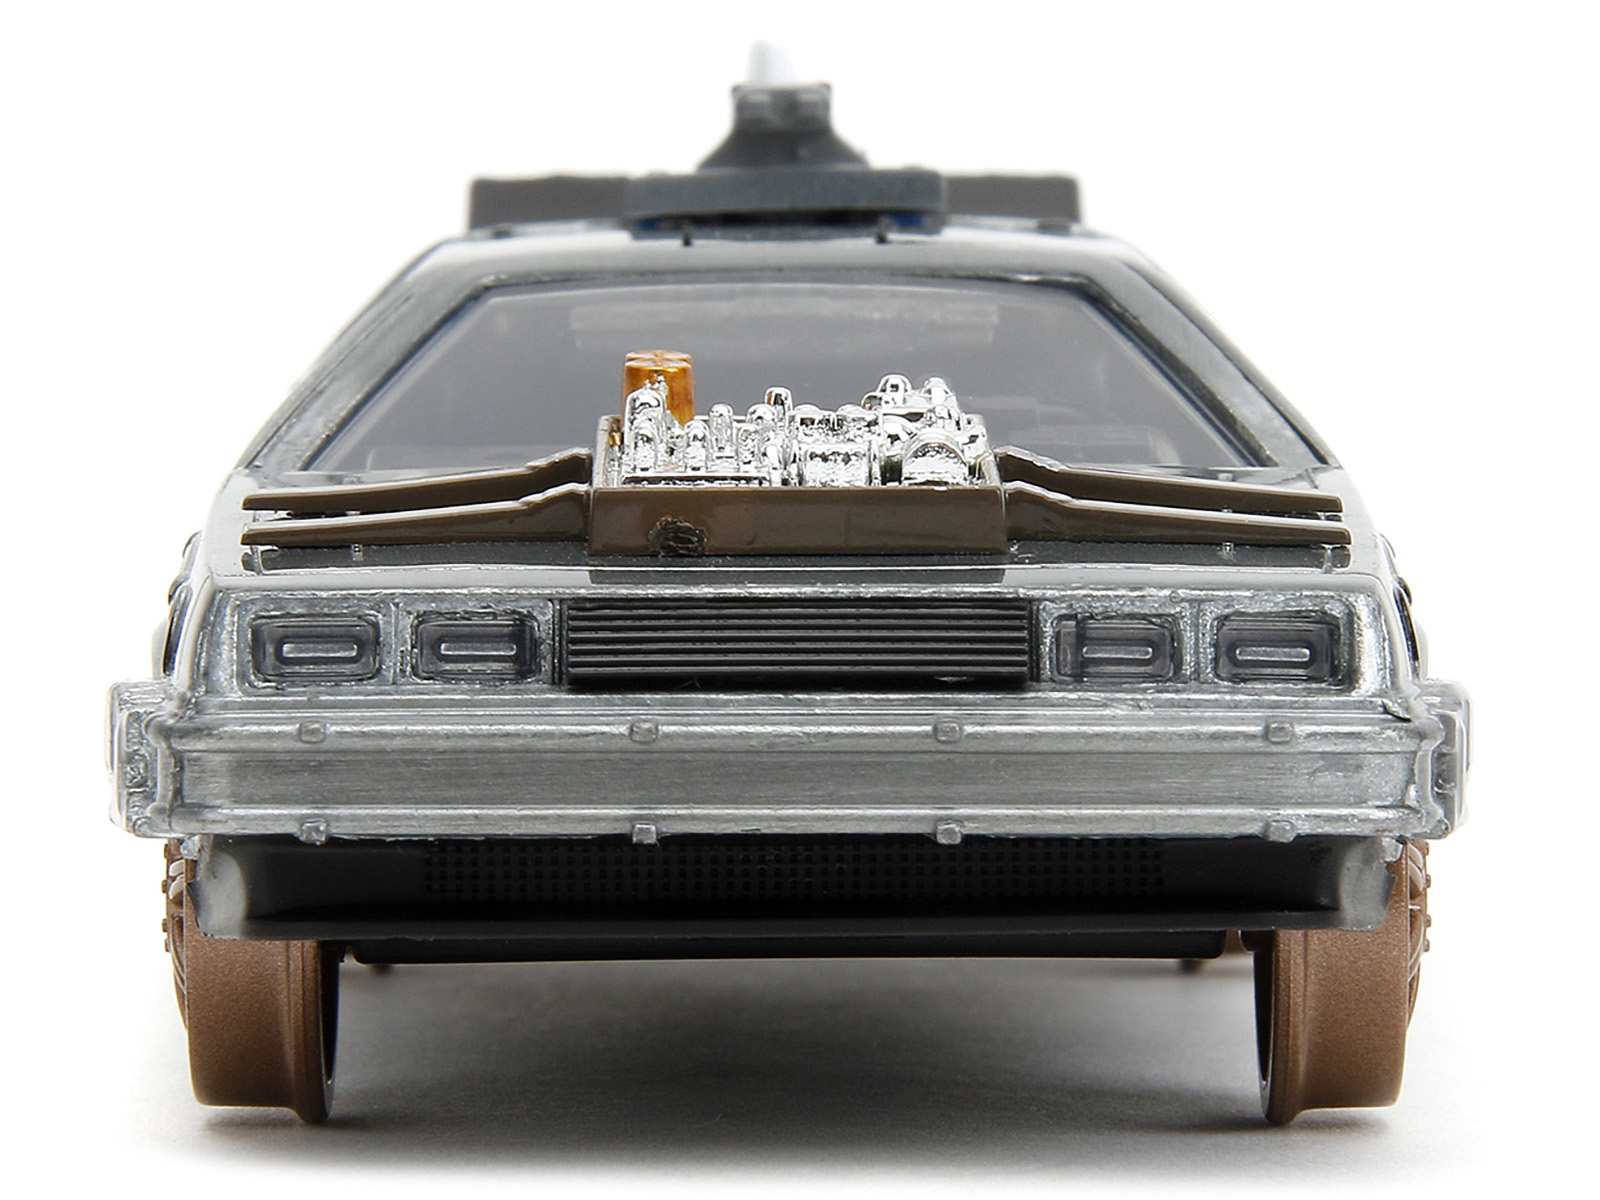 DeLorean DMC (Time Machine) Brushed Metal Train Wheel Version - 18.54